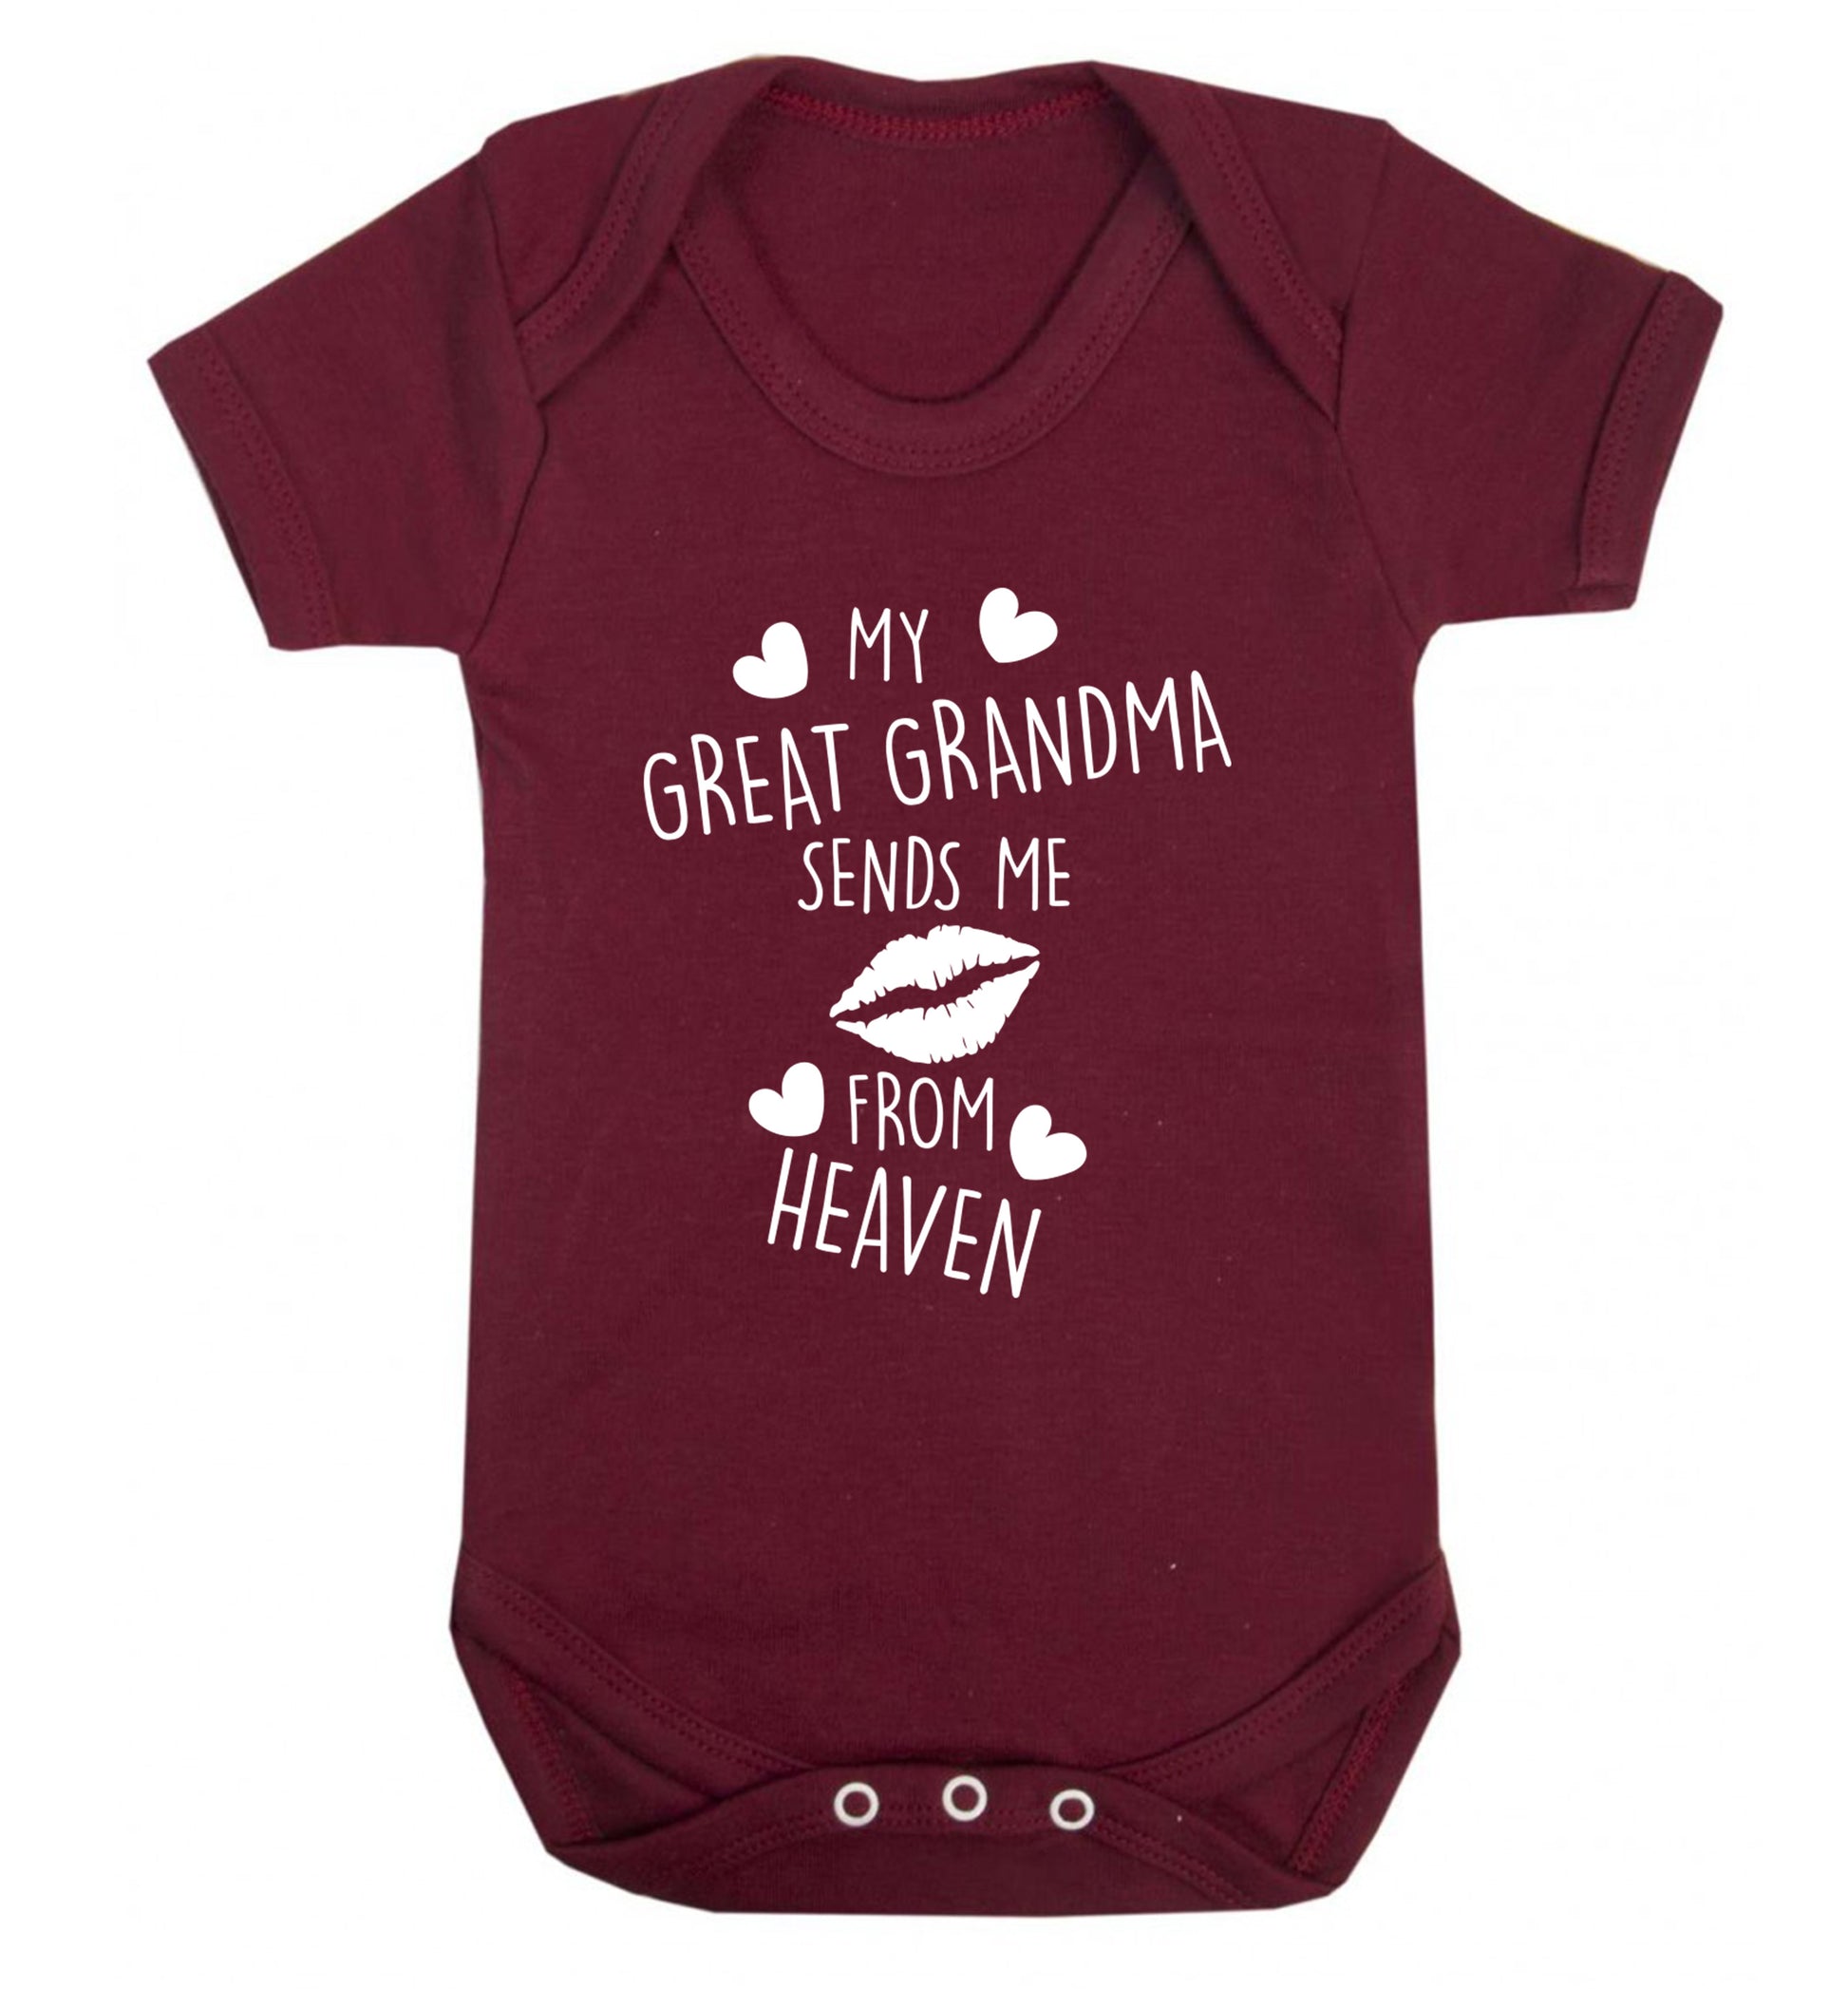 My great grandma sends me kisses from heaven Baby Vest maroon 18-24 months